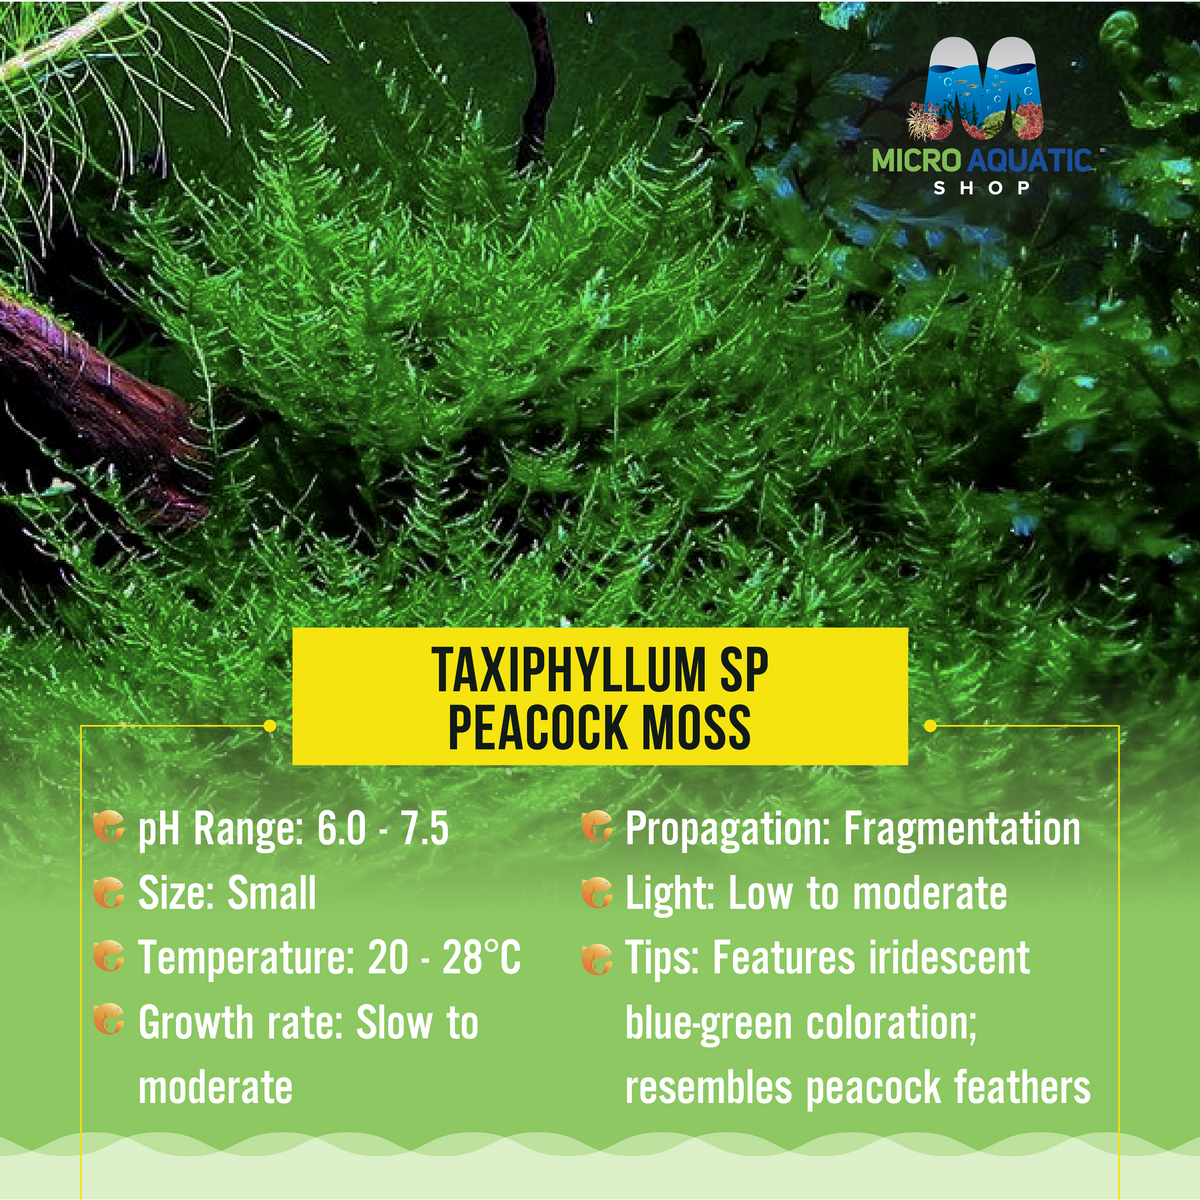 Taxiphyllum sp Peacock Moss